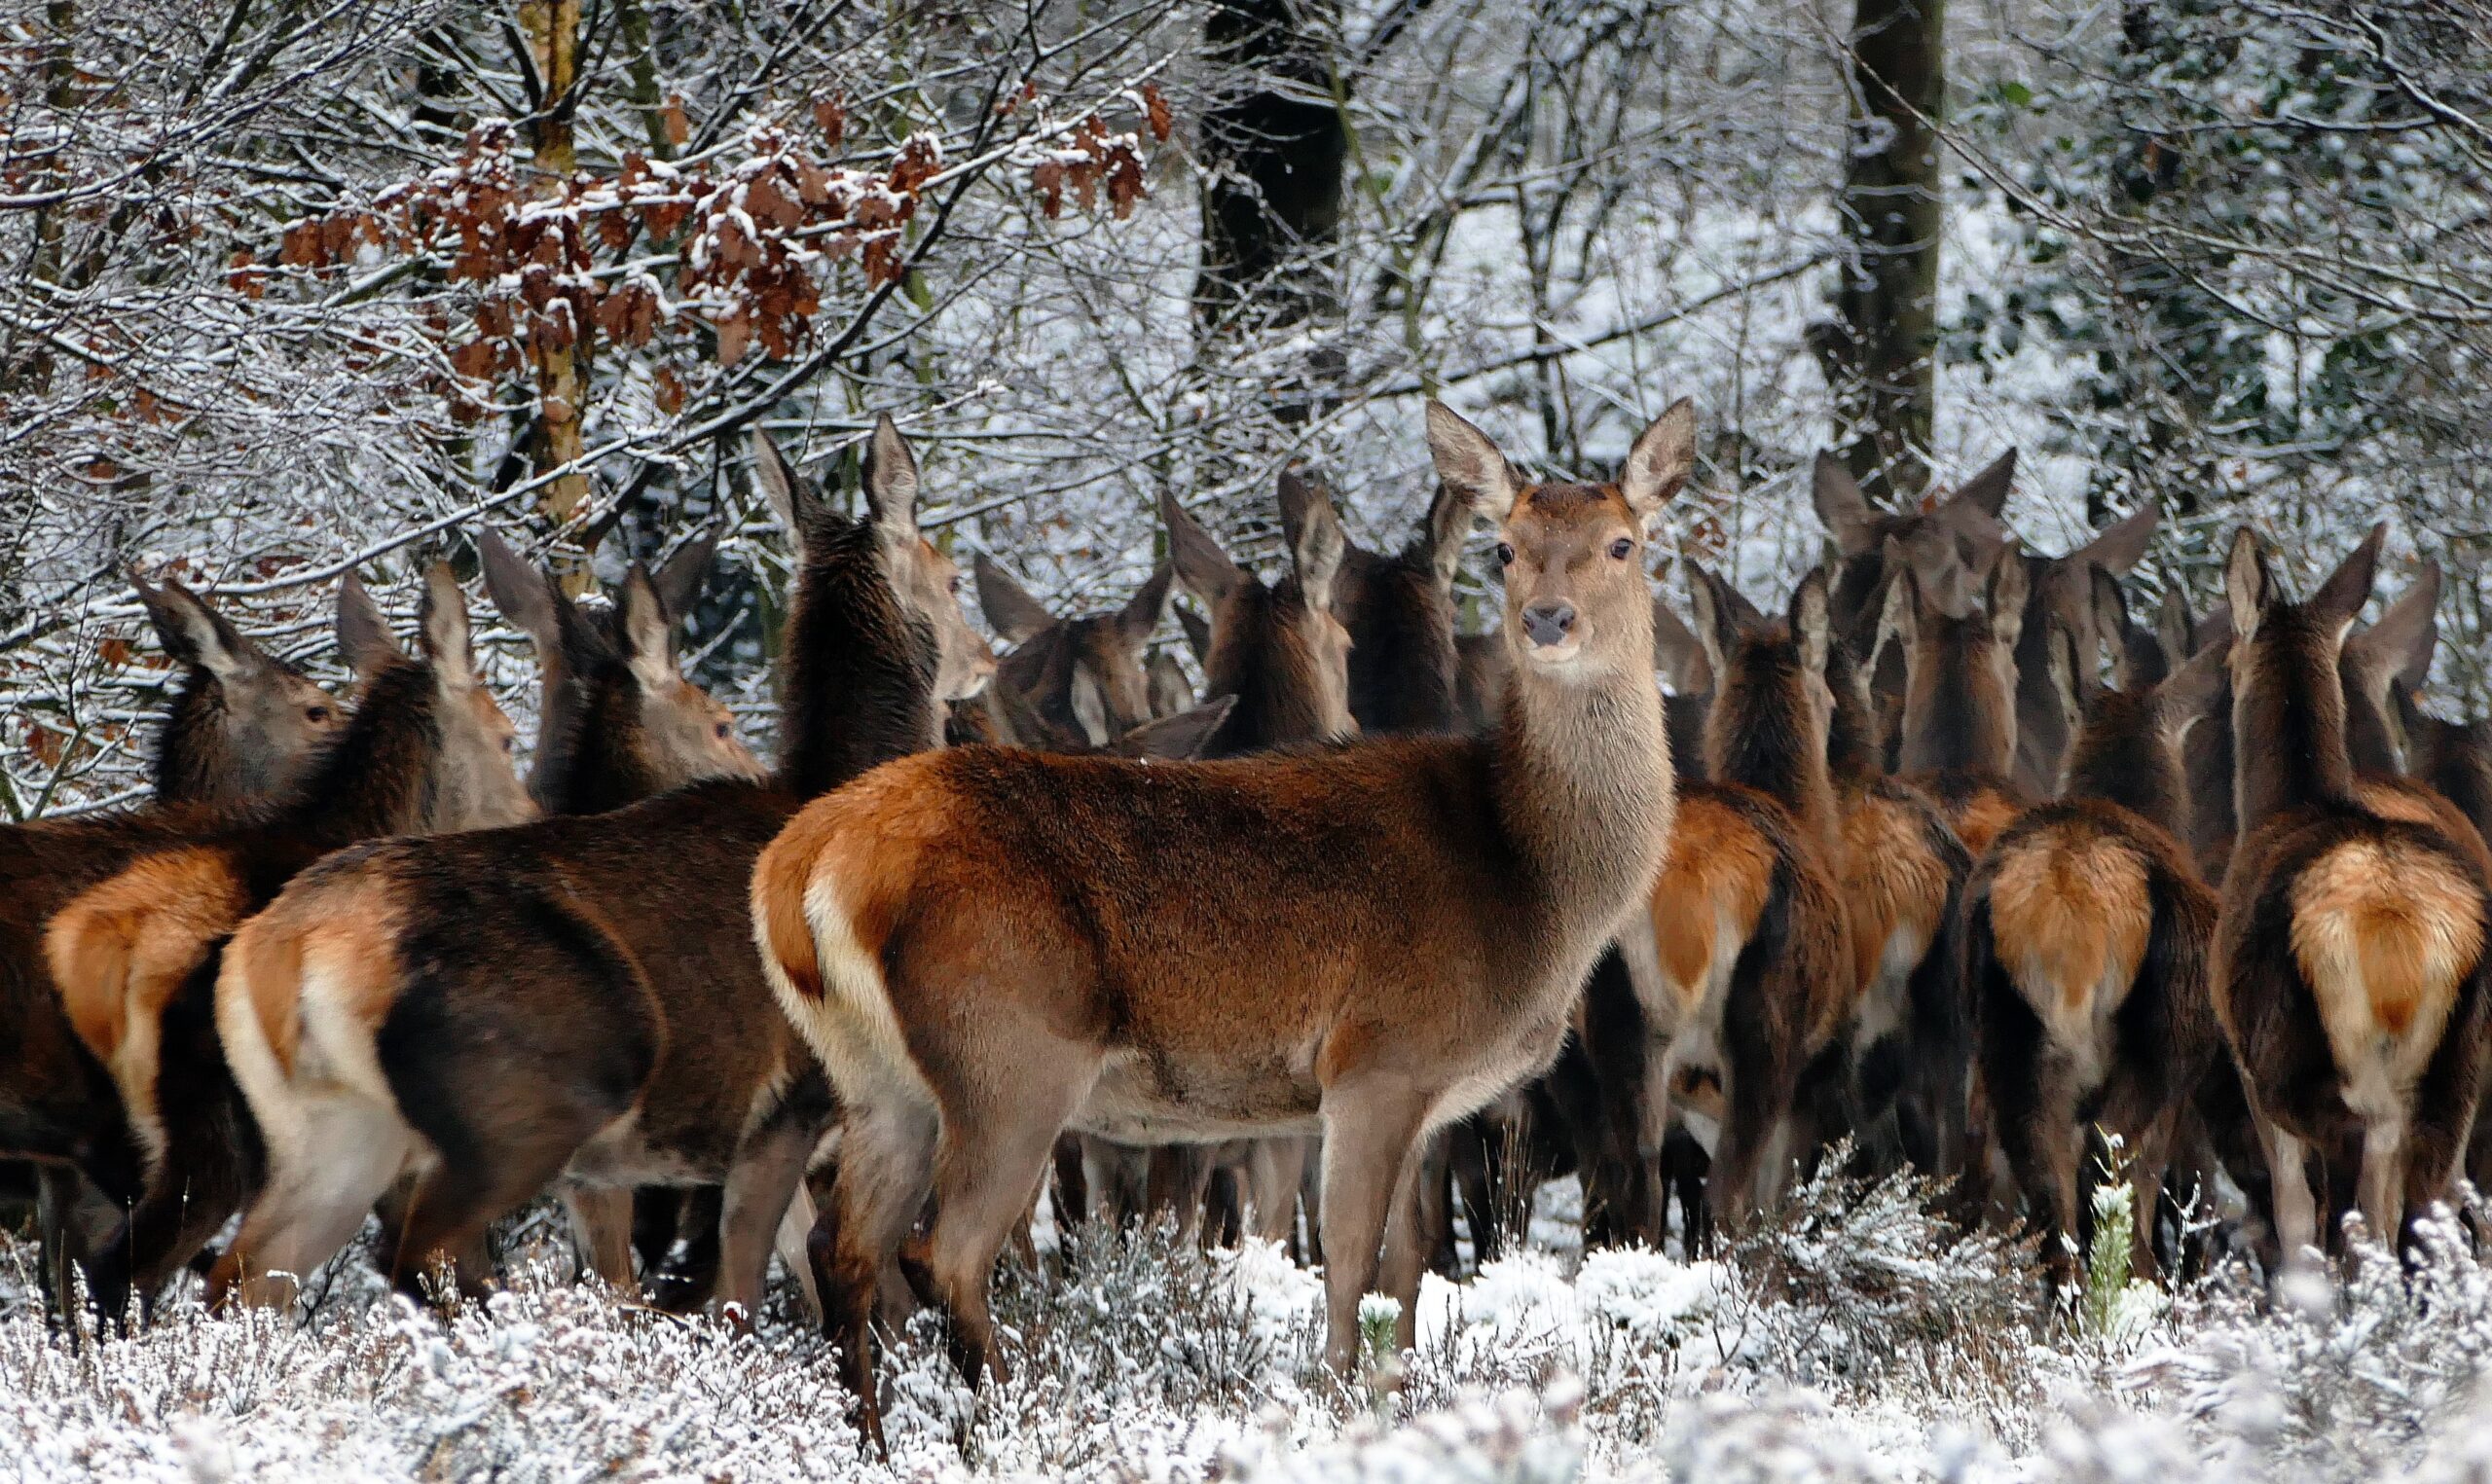 Herd of deer in forest with one alert deer at the end indicating self aware leadership.